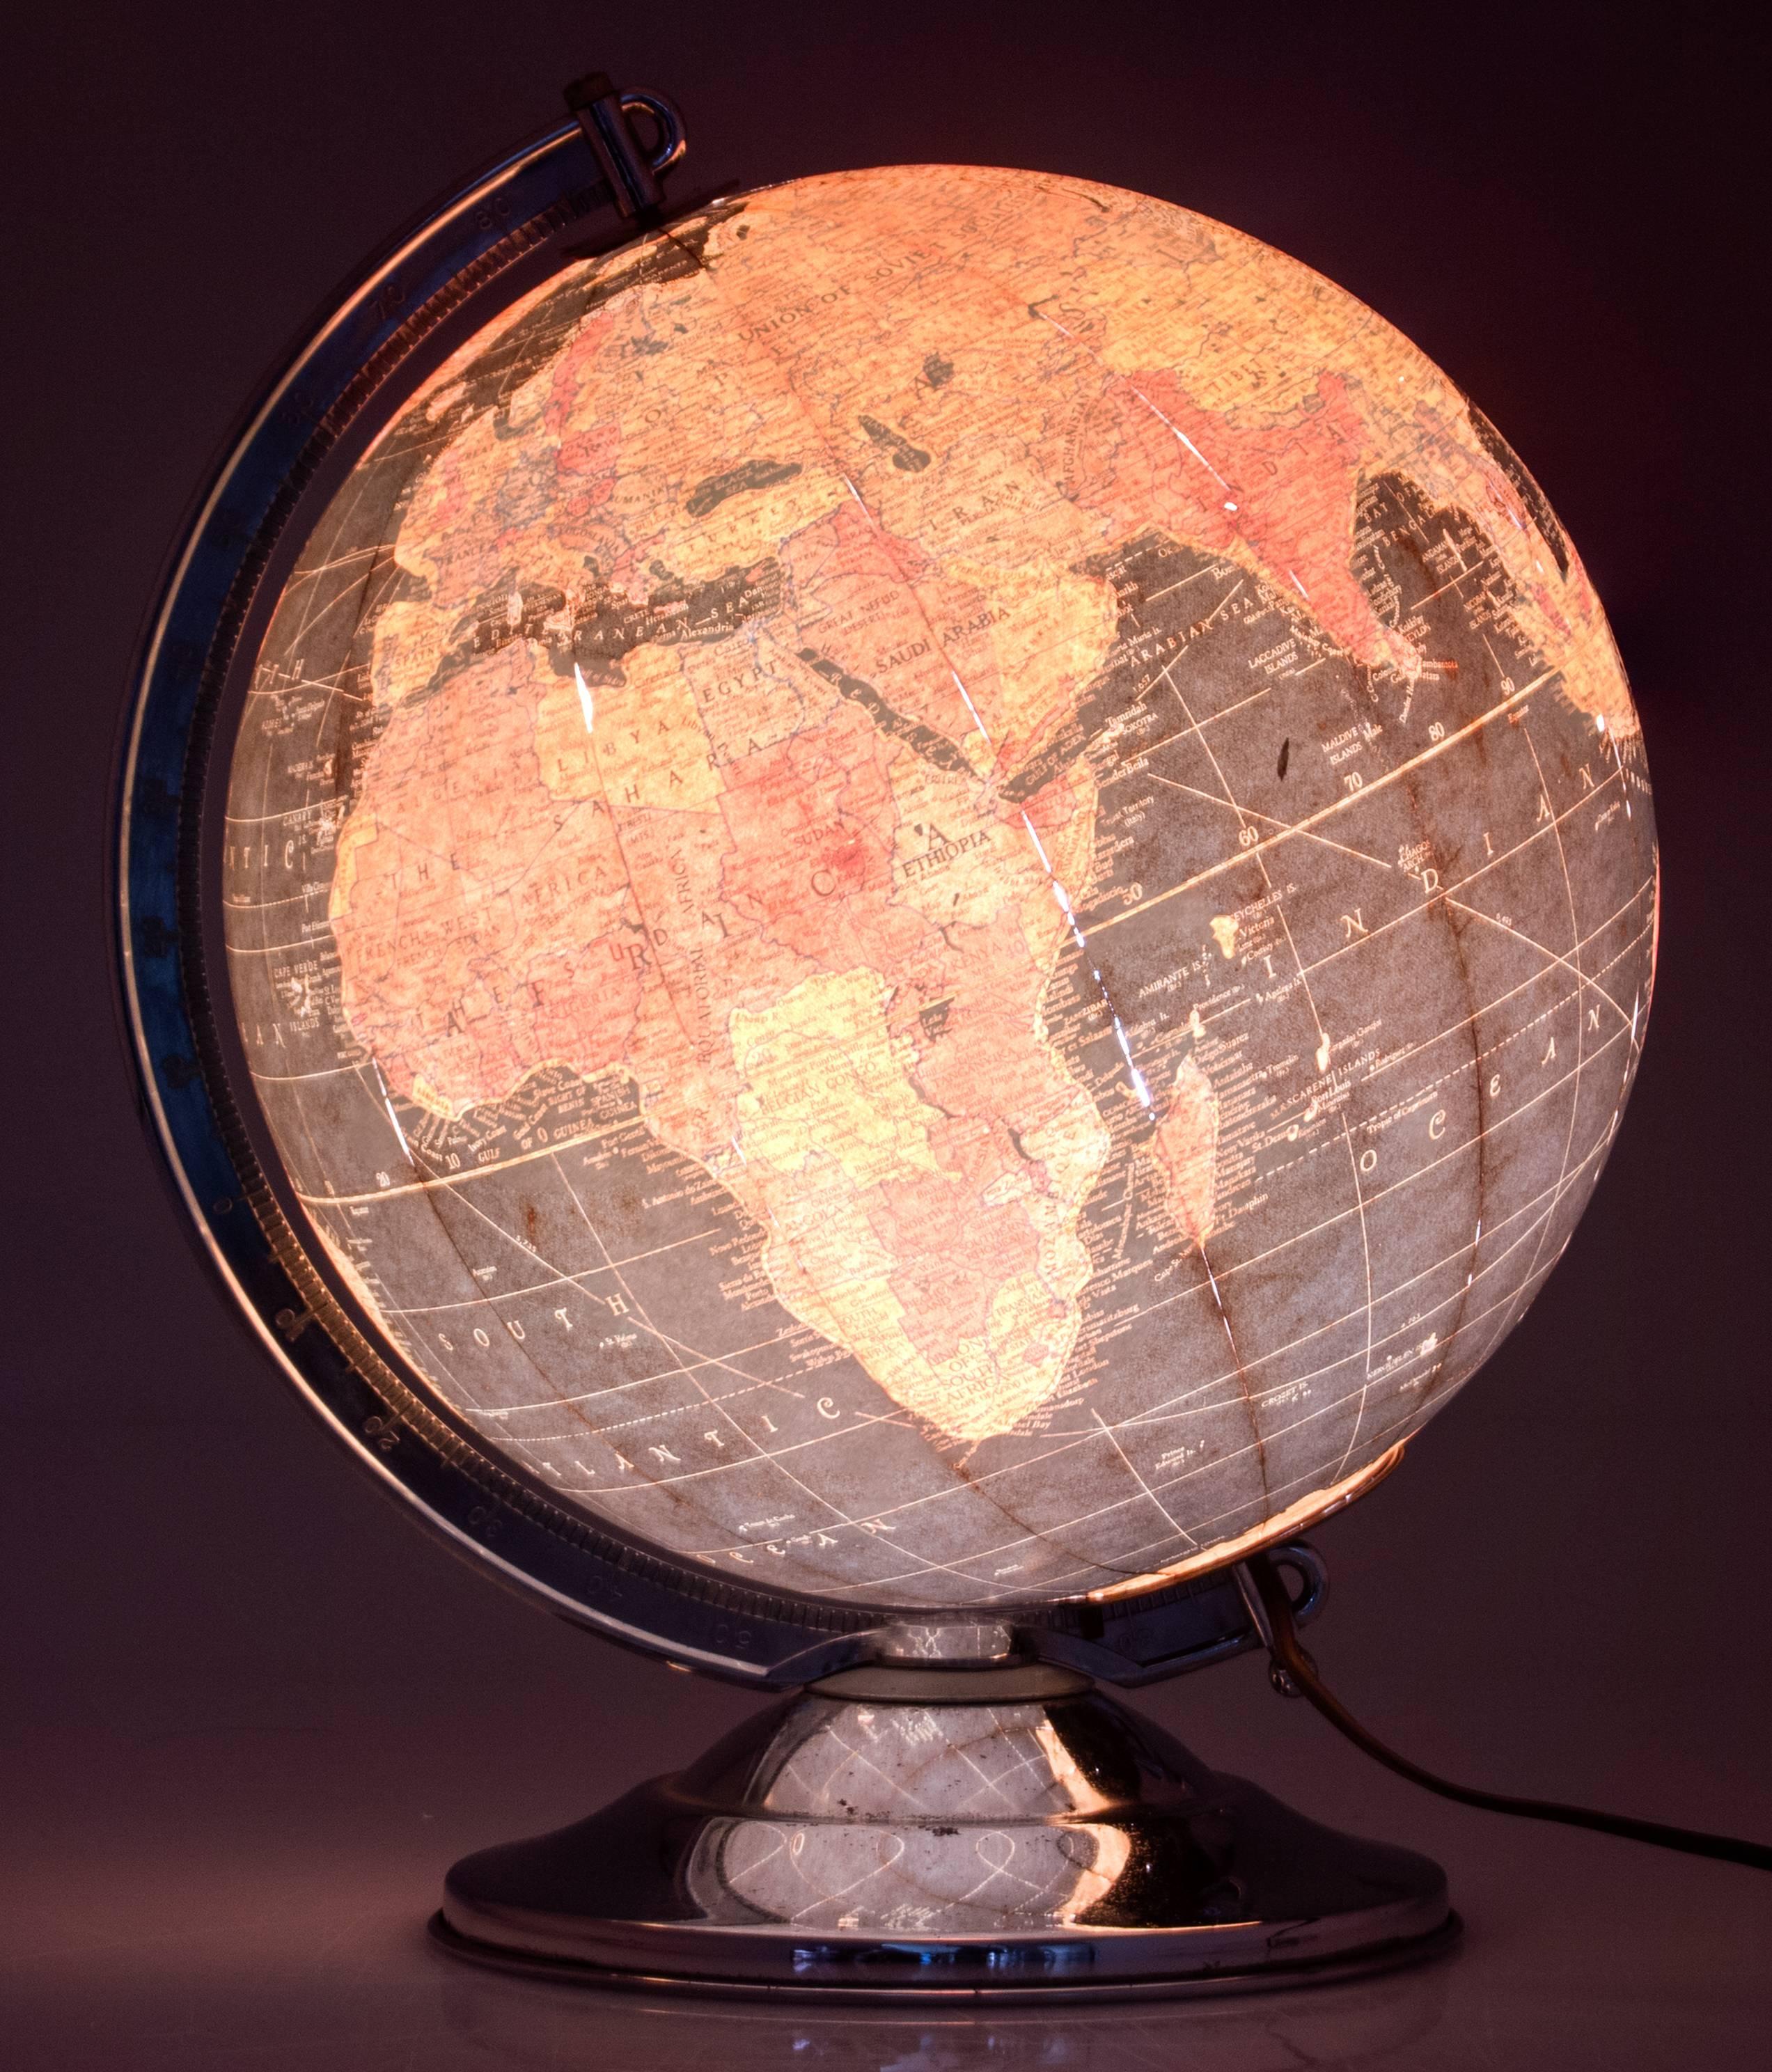 Amazing graphics on this globe.